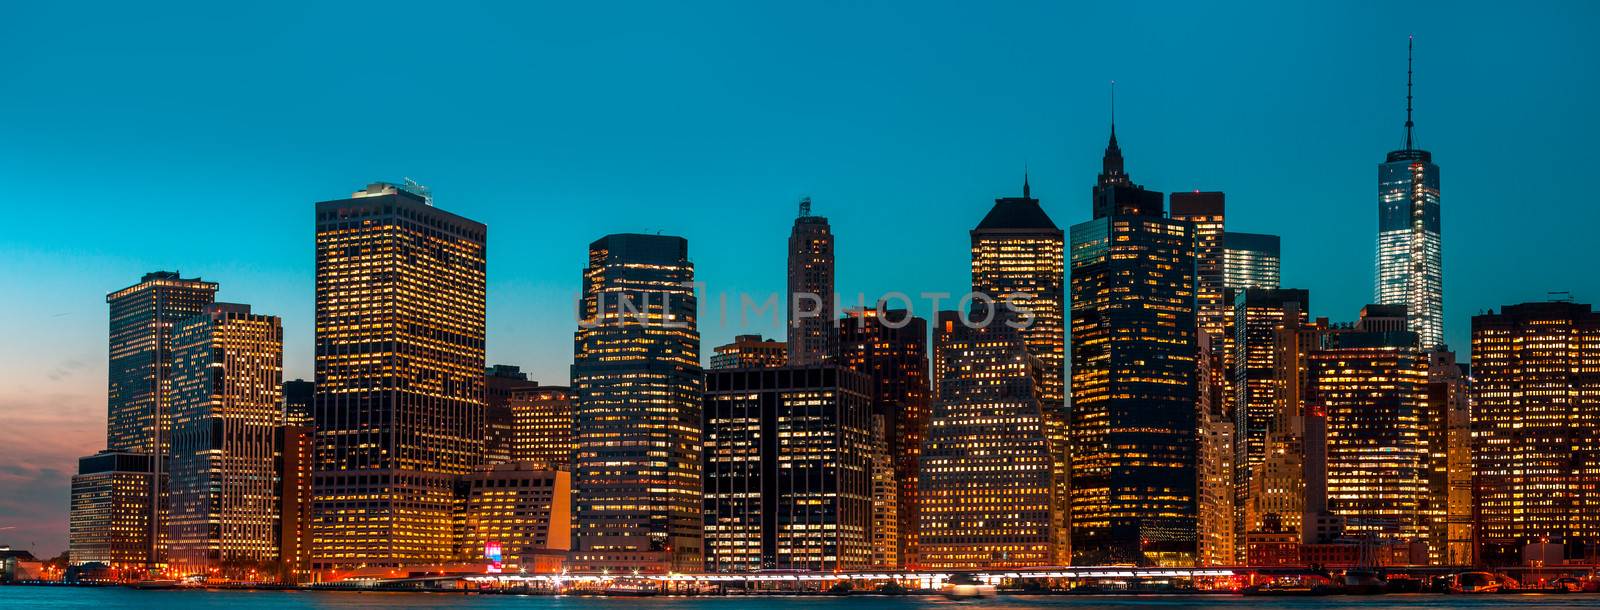 Manhattan at night by palinchak